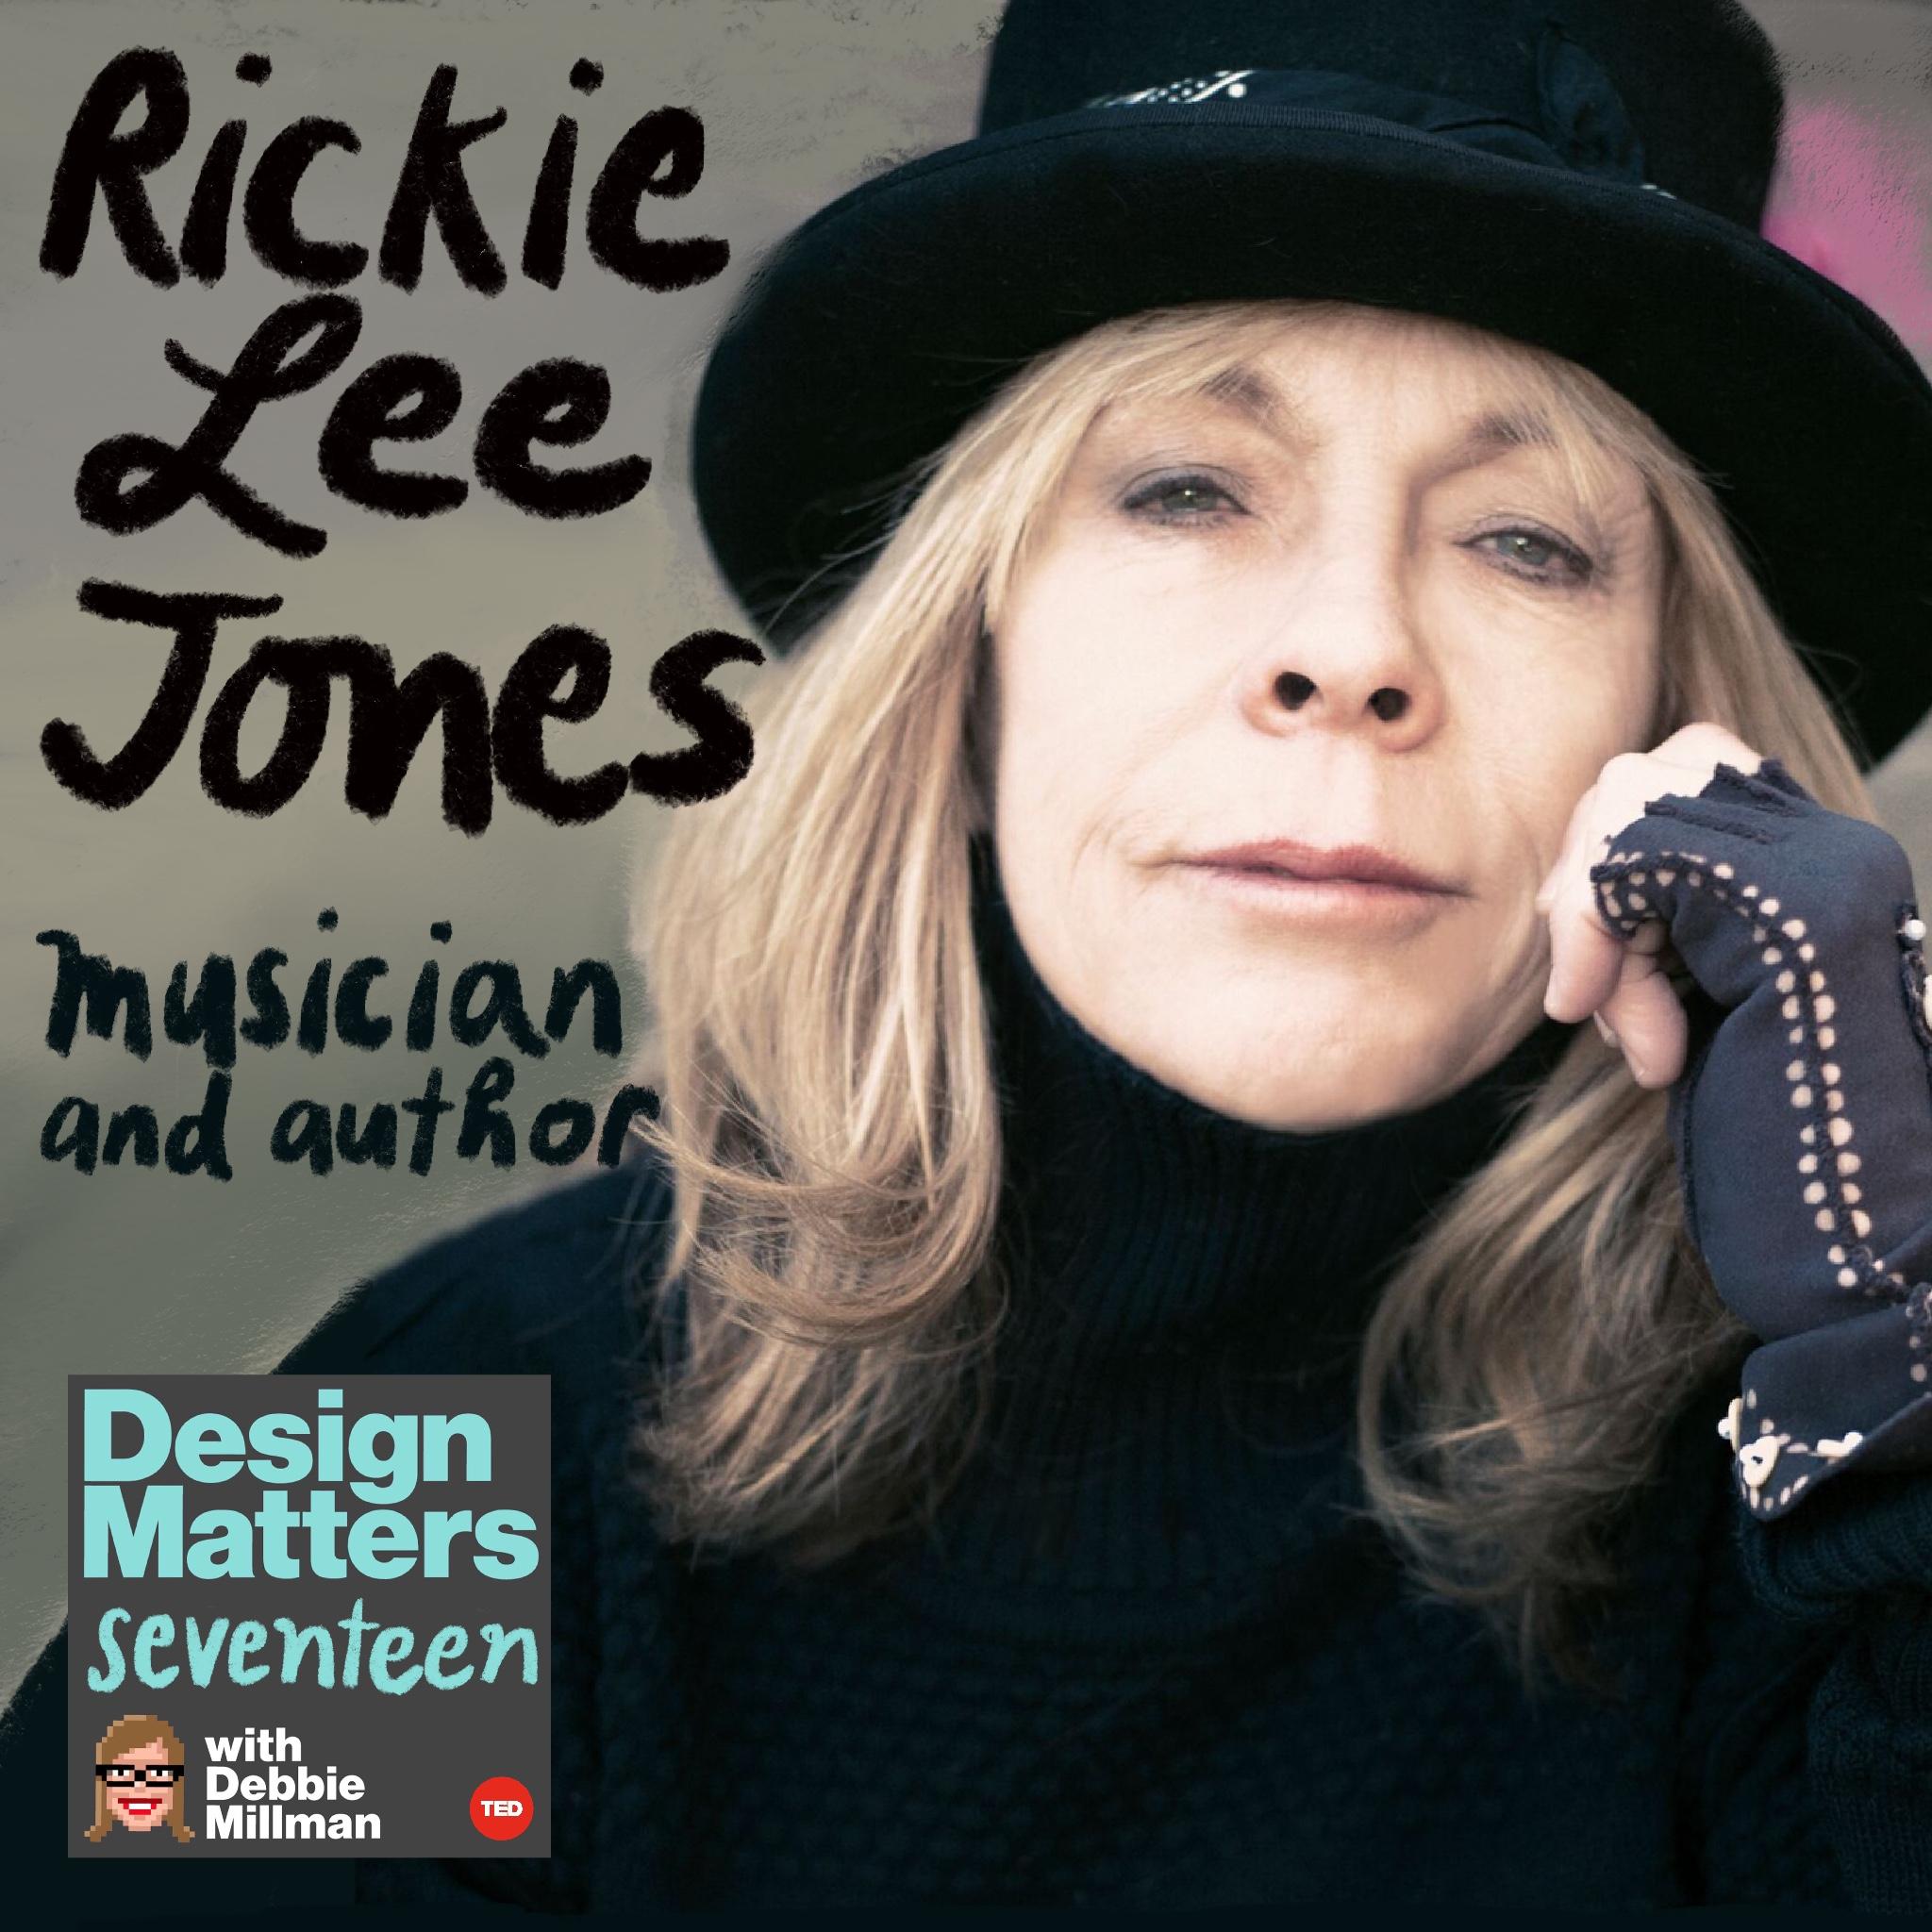 Thumbnail for "Rickie Lee Jones".